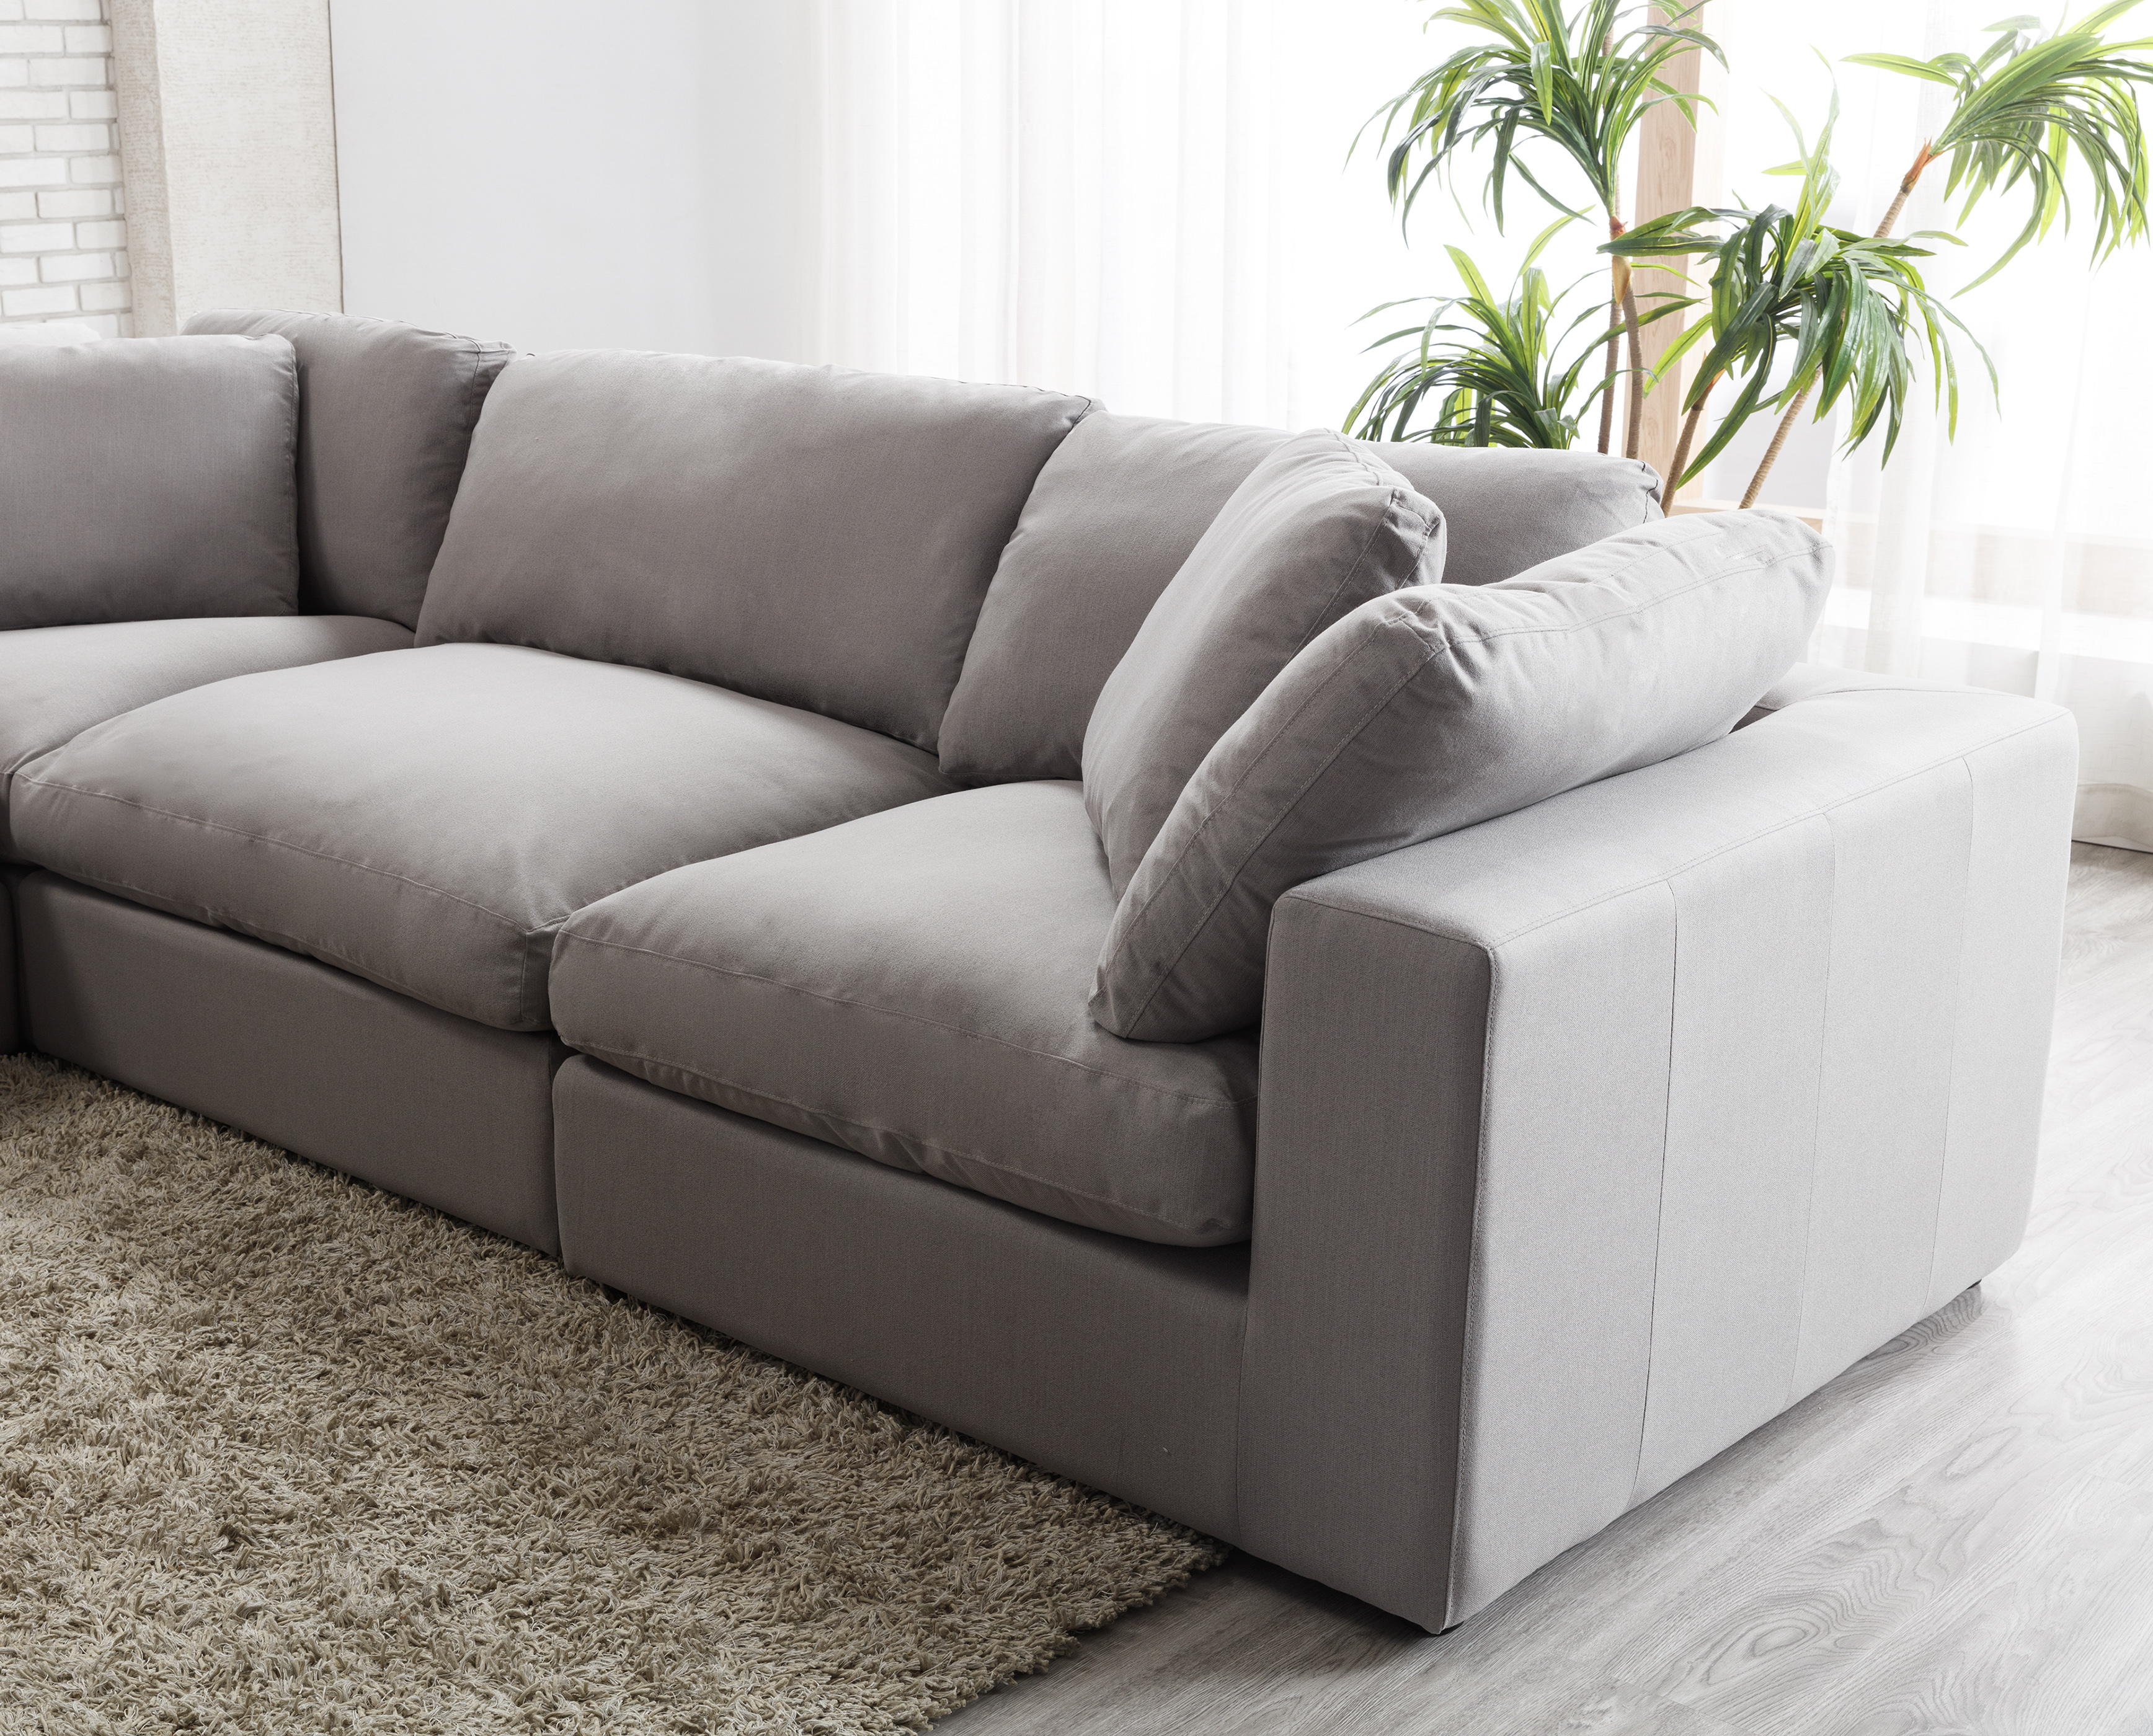 Roundhill Furniture Rivas Contemporary 4-Piece Sectional Sofa - Graphite - image 4 of 9